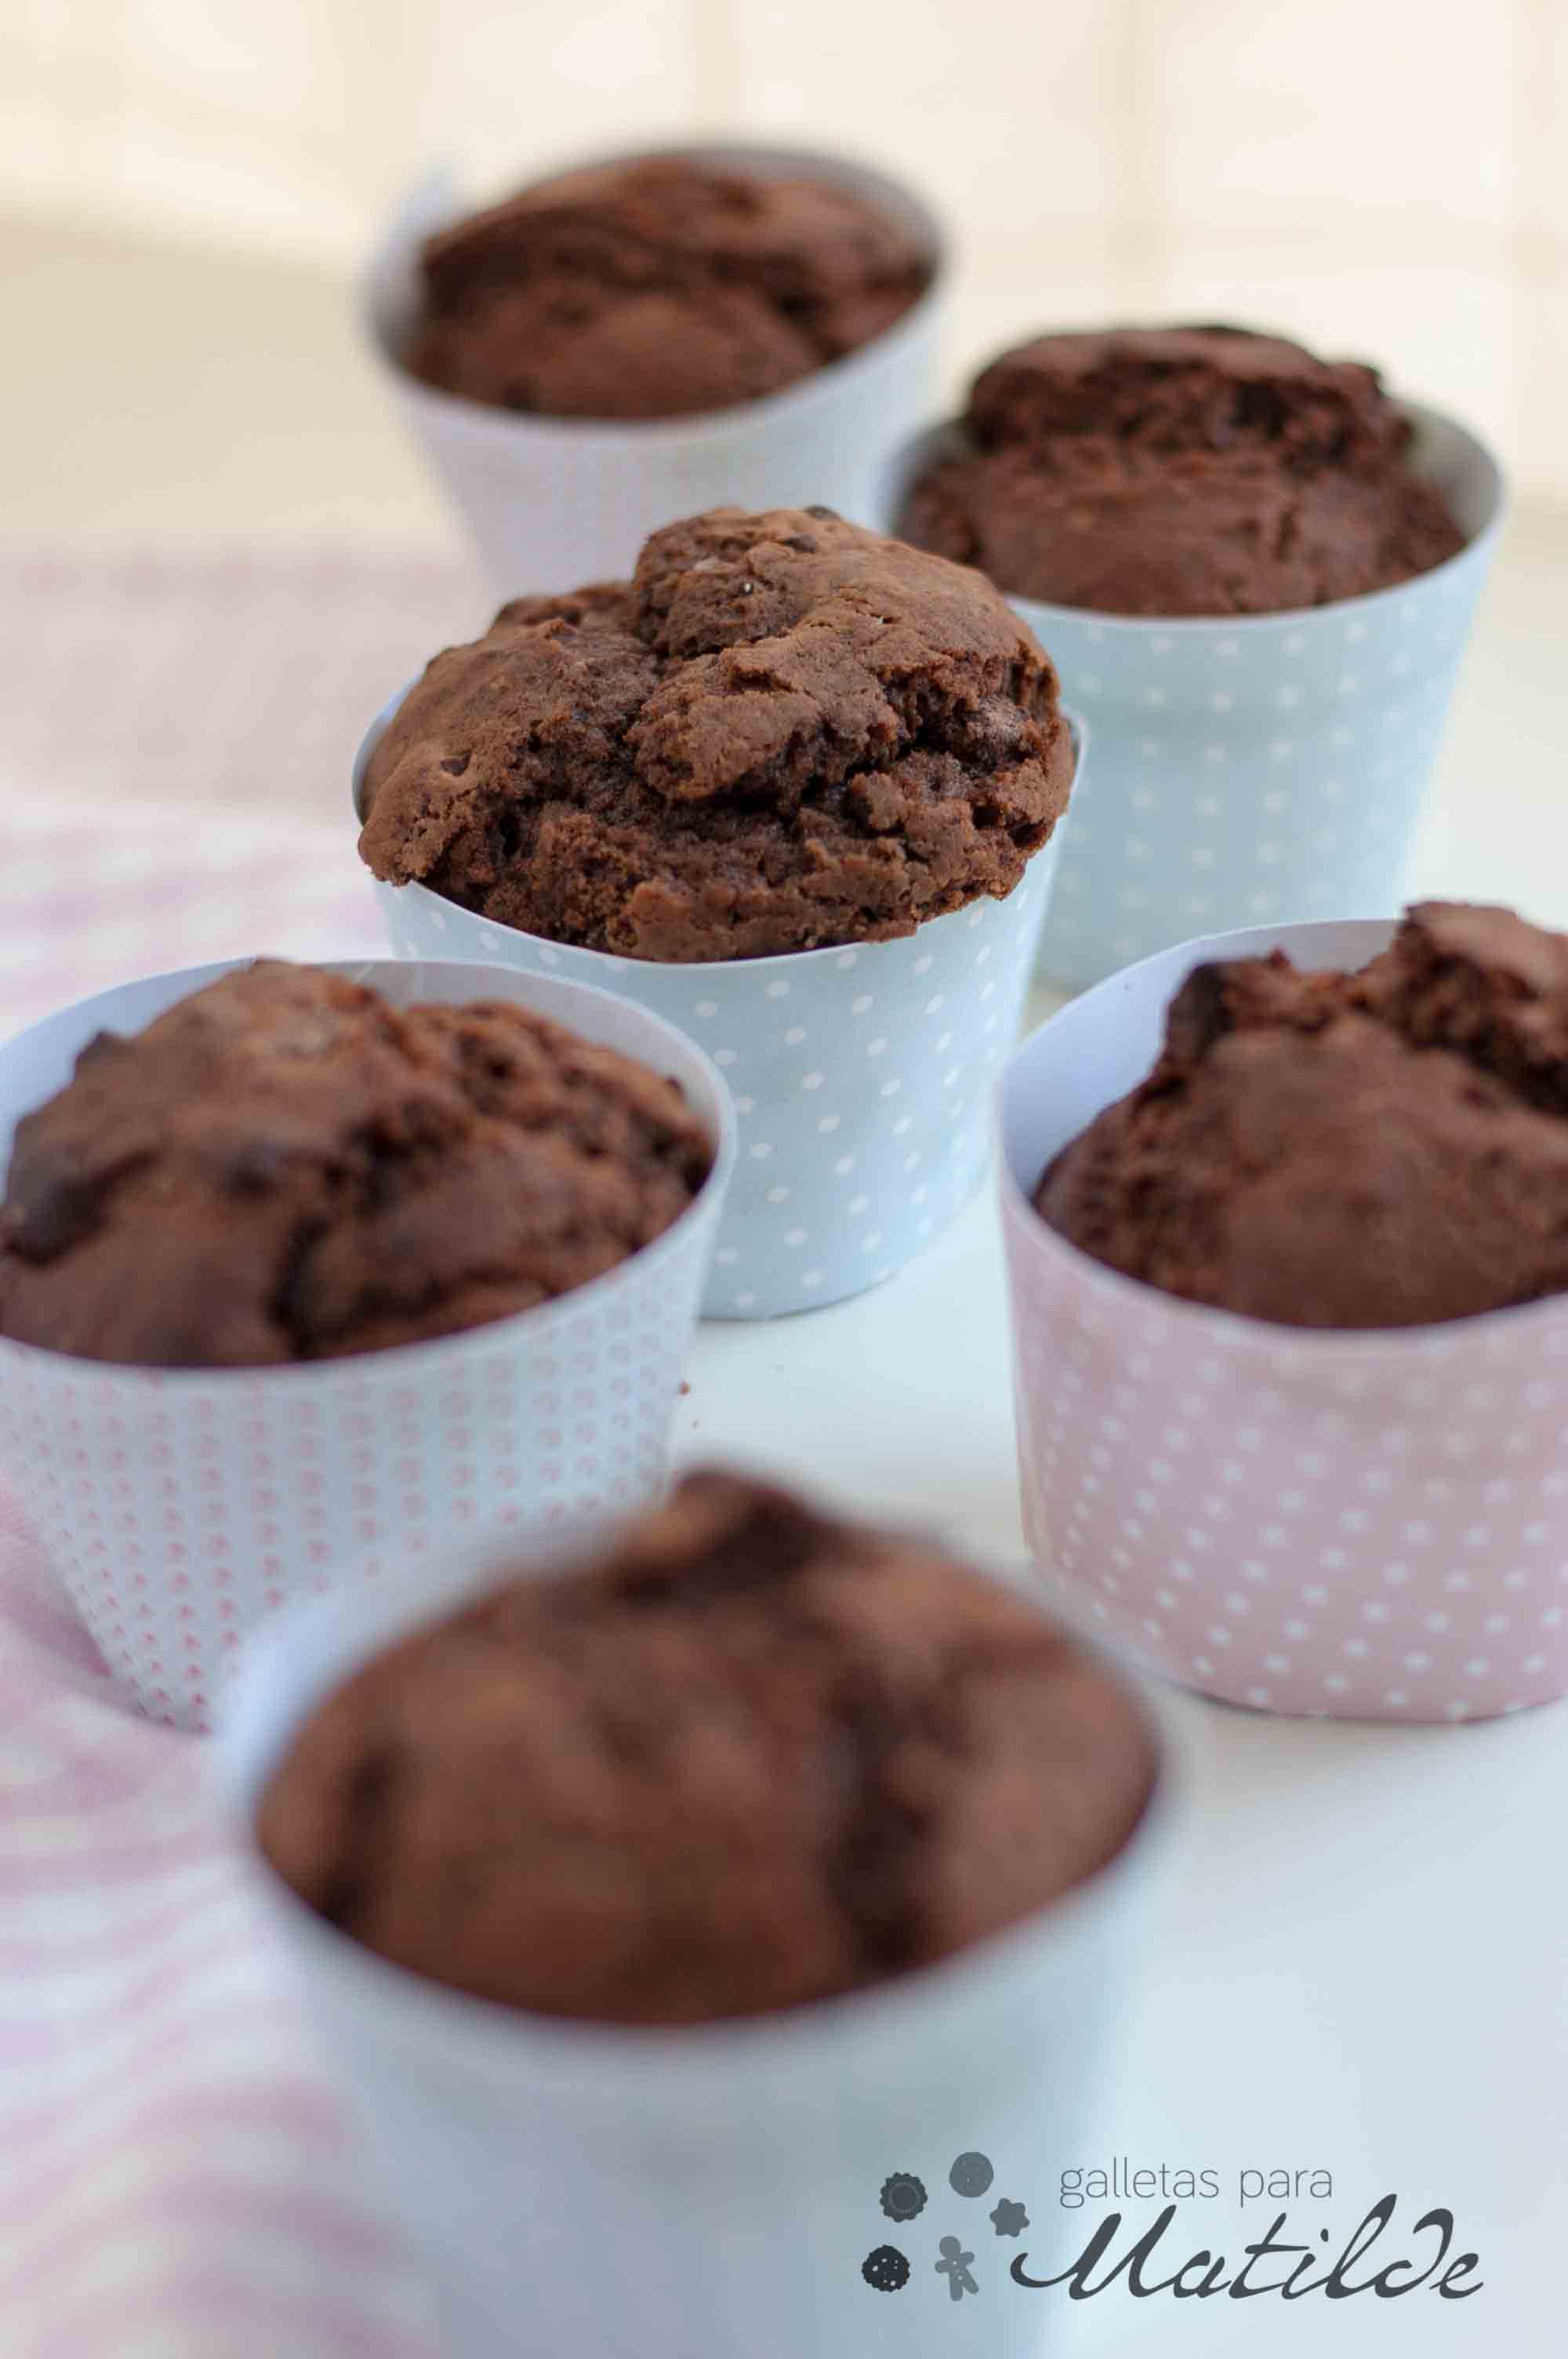 Muffins de chocolate | Galletas para matilde